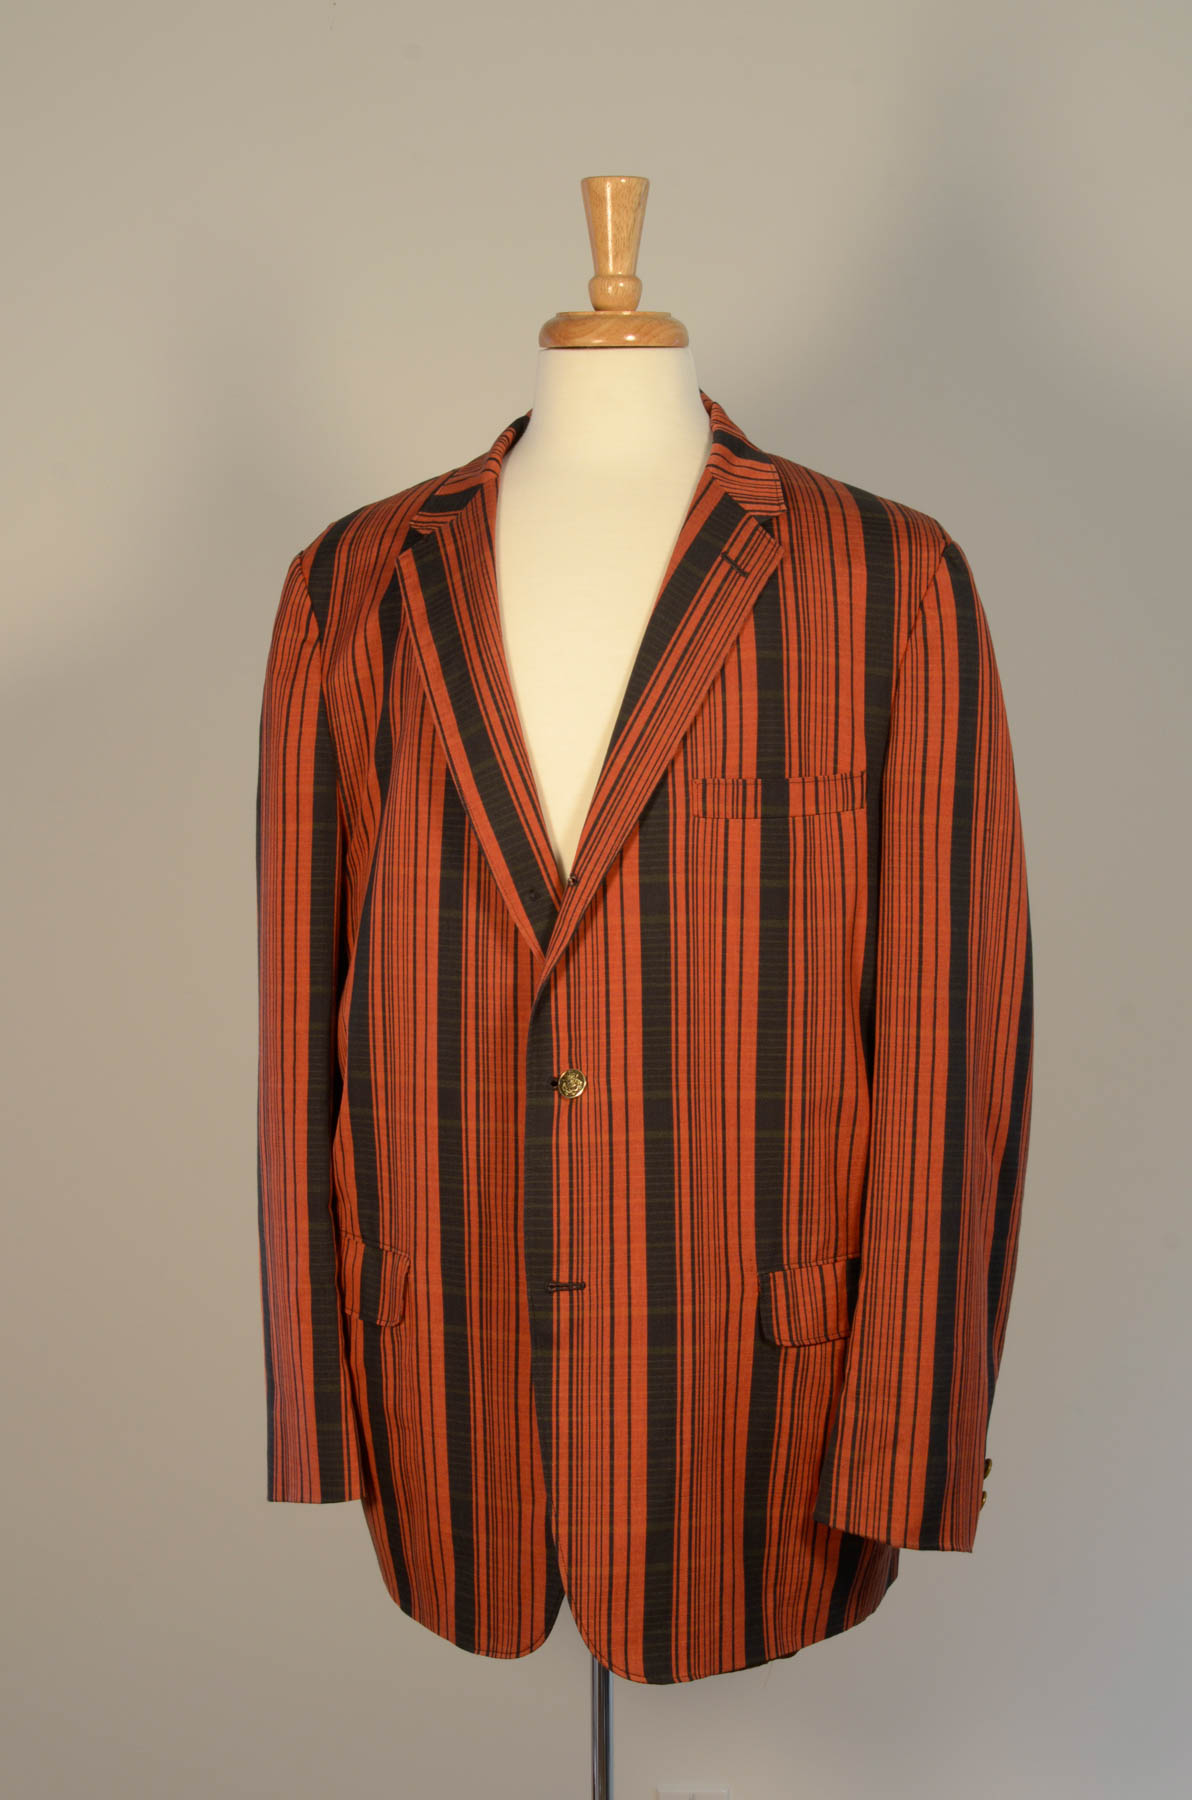 1946 Reunion Jacket I | Princetoniana Museum